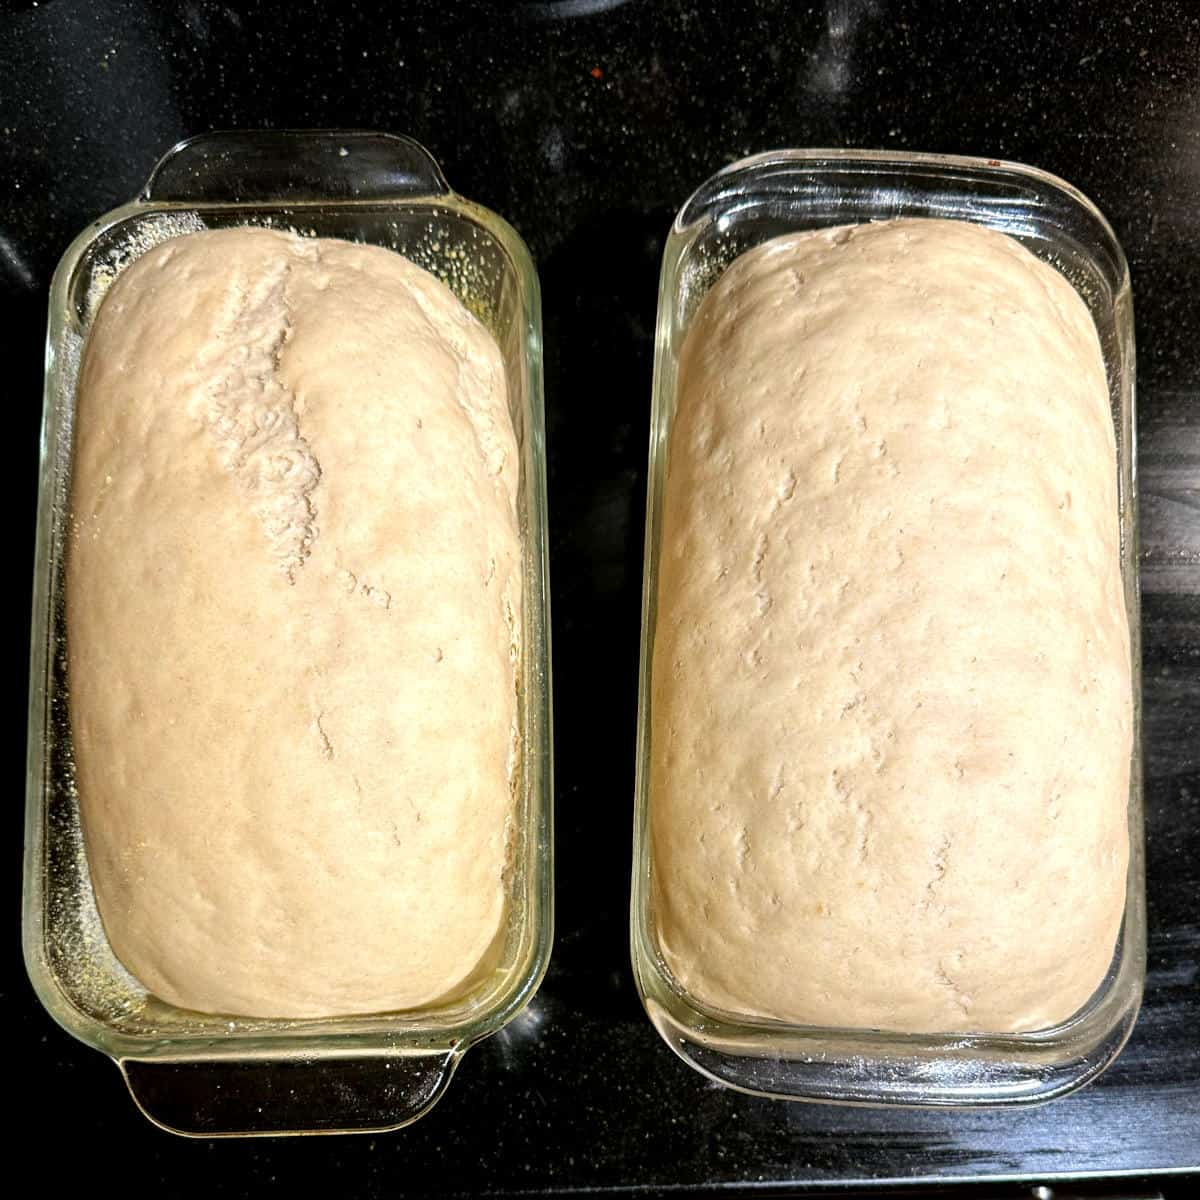 Sourdough sandwich bread loaves after rising.